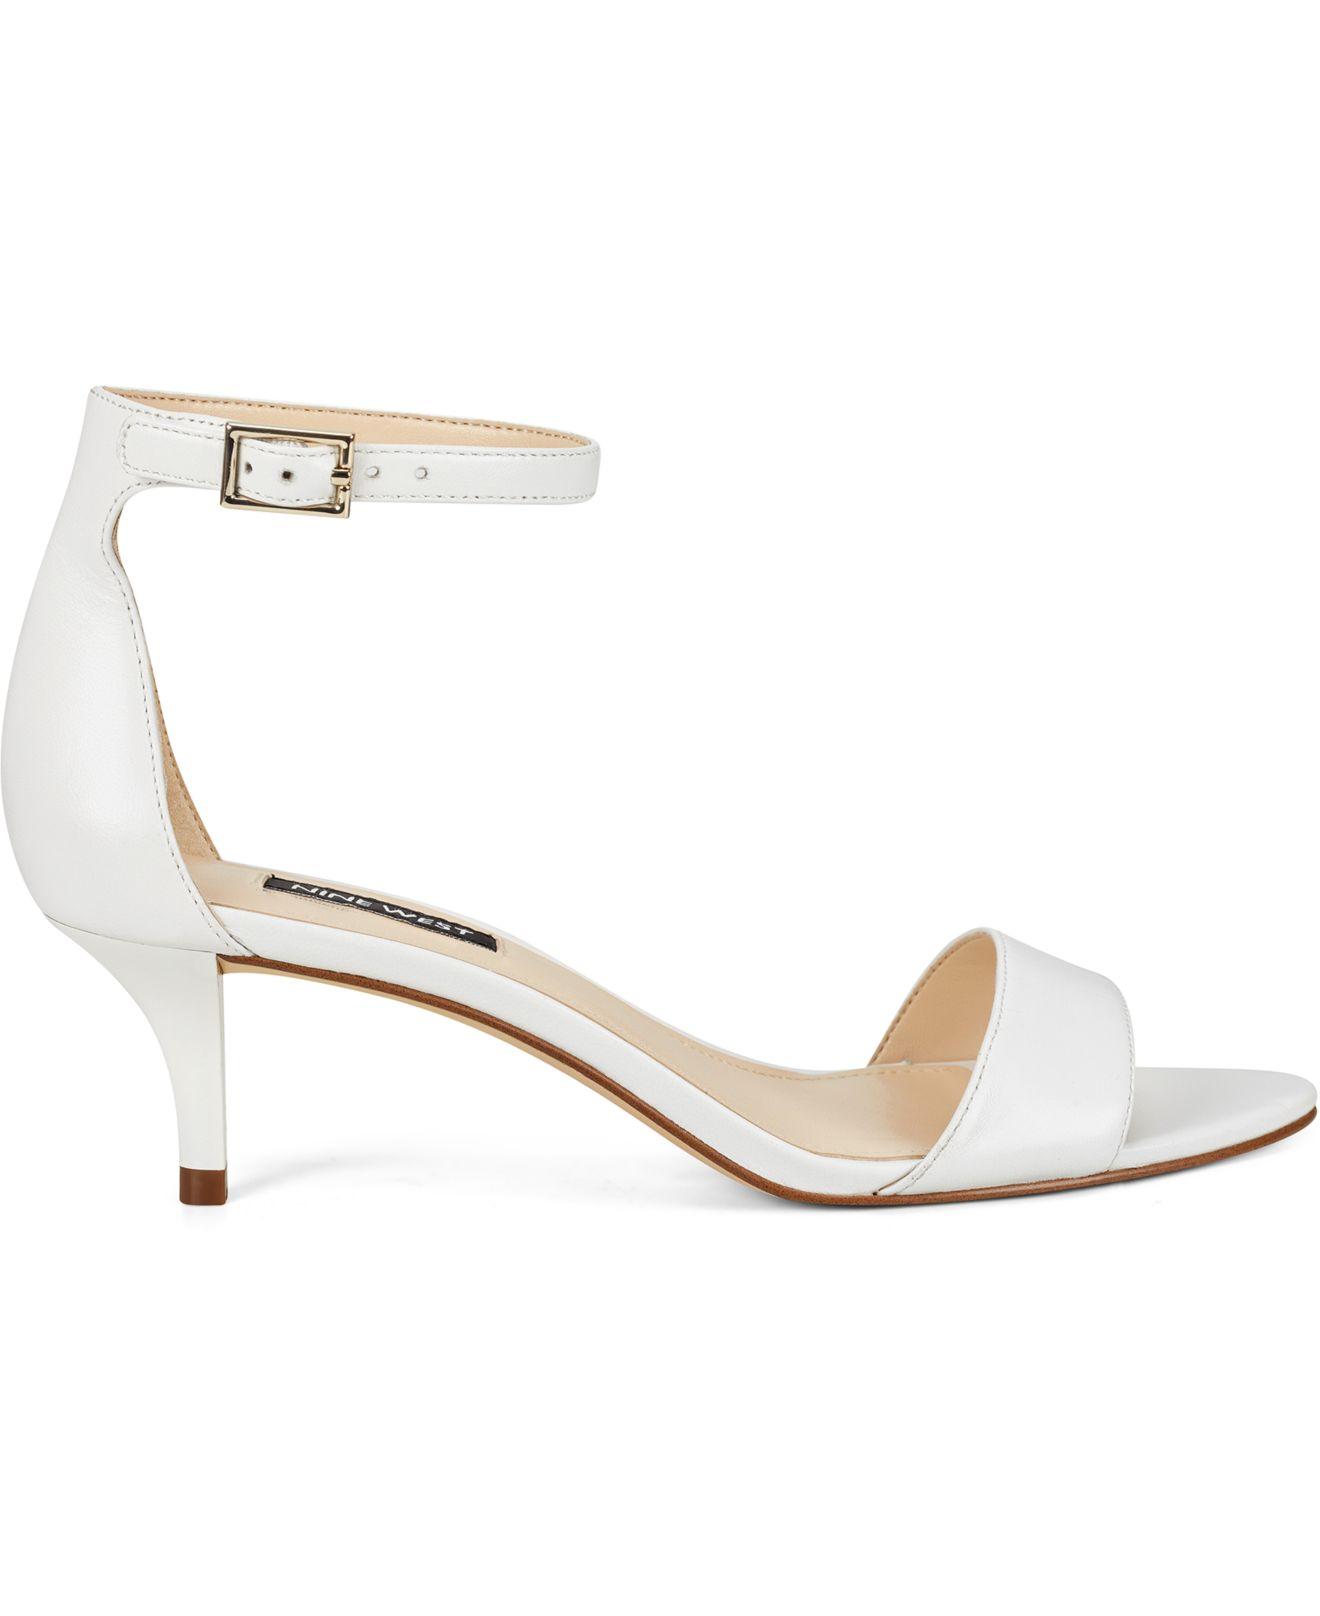 Nine West Leisa Leather Two-piece Kitten Heel Sandals in White | Lyst